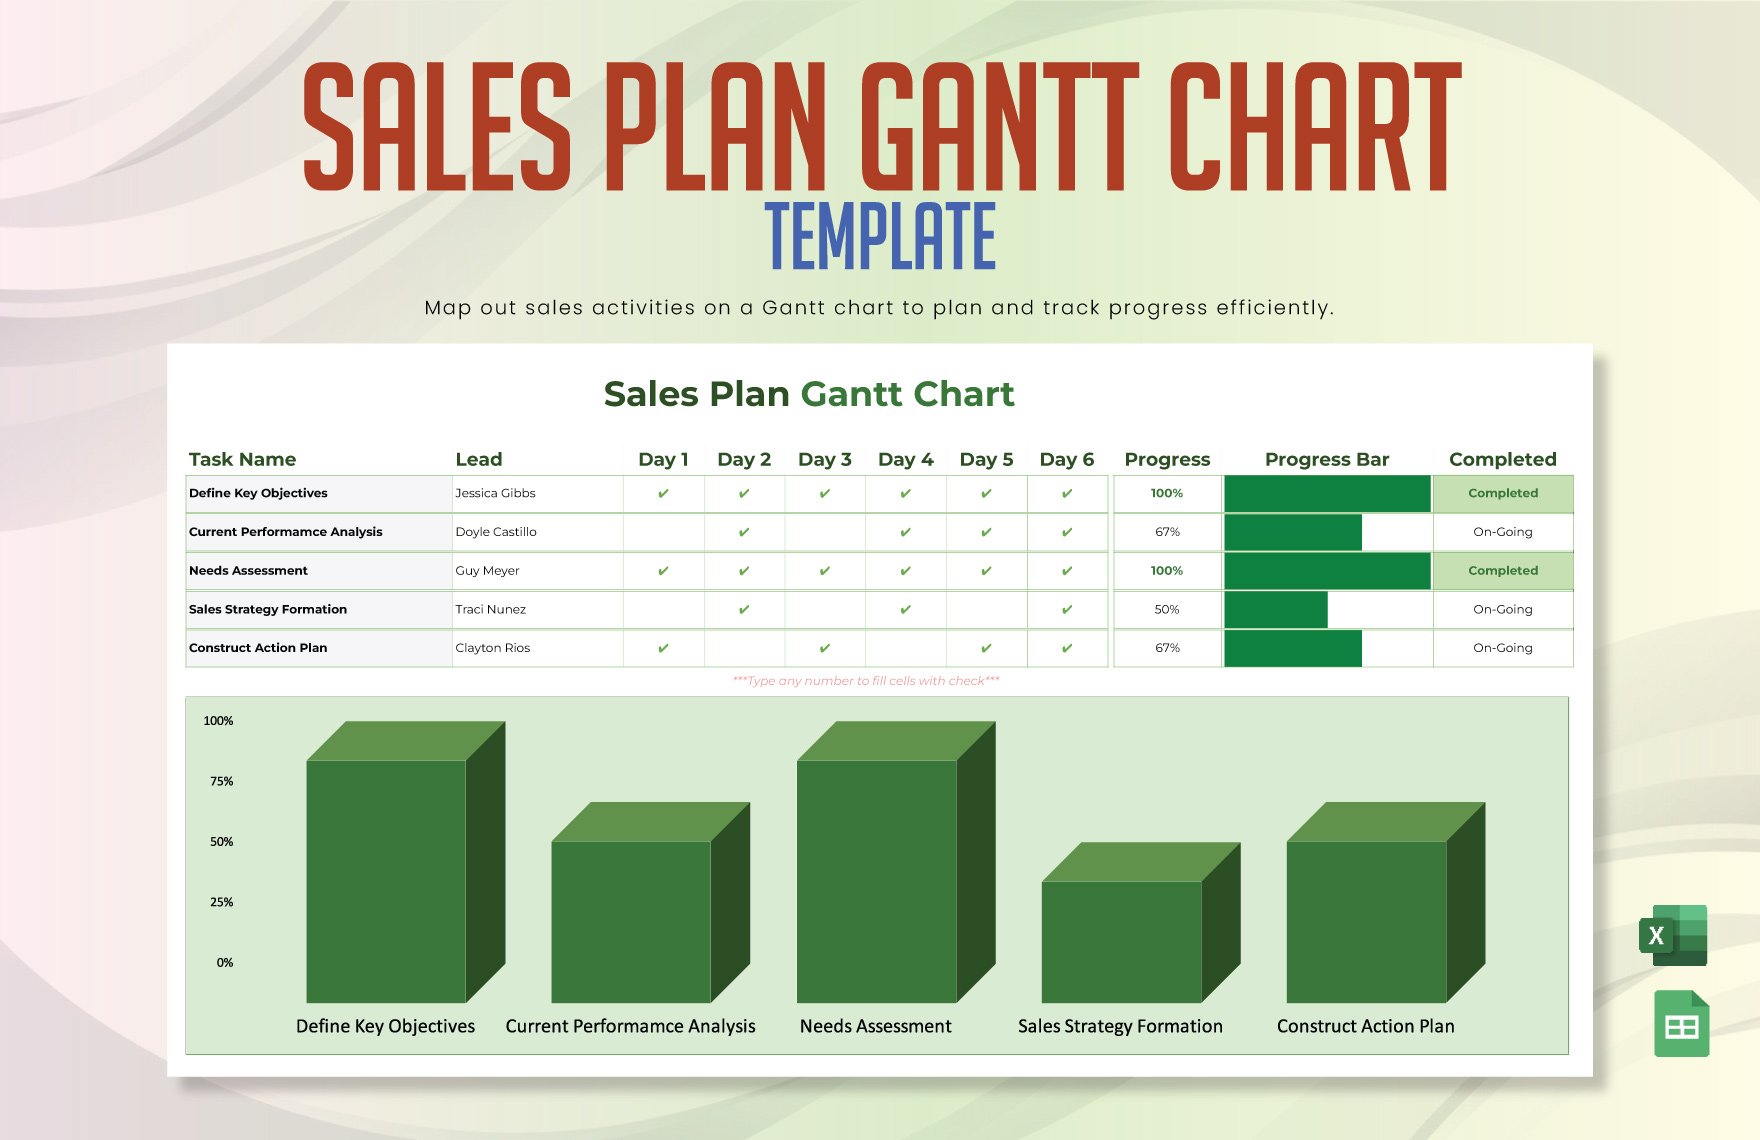 Sales Plan Gantt Chart Template in Excel, Google Sheets